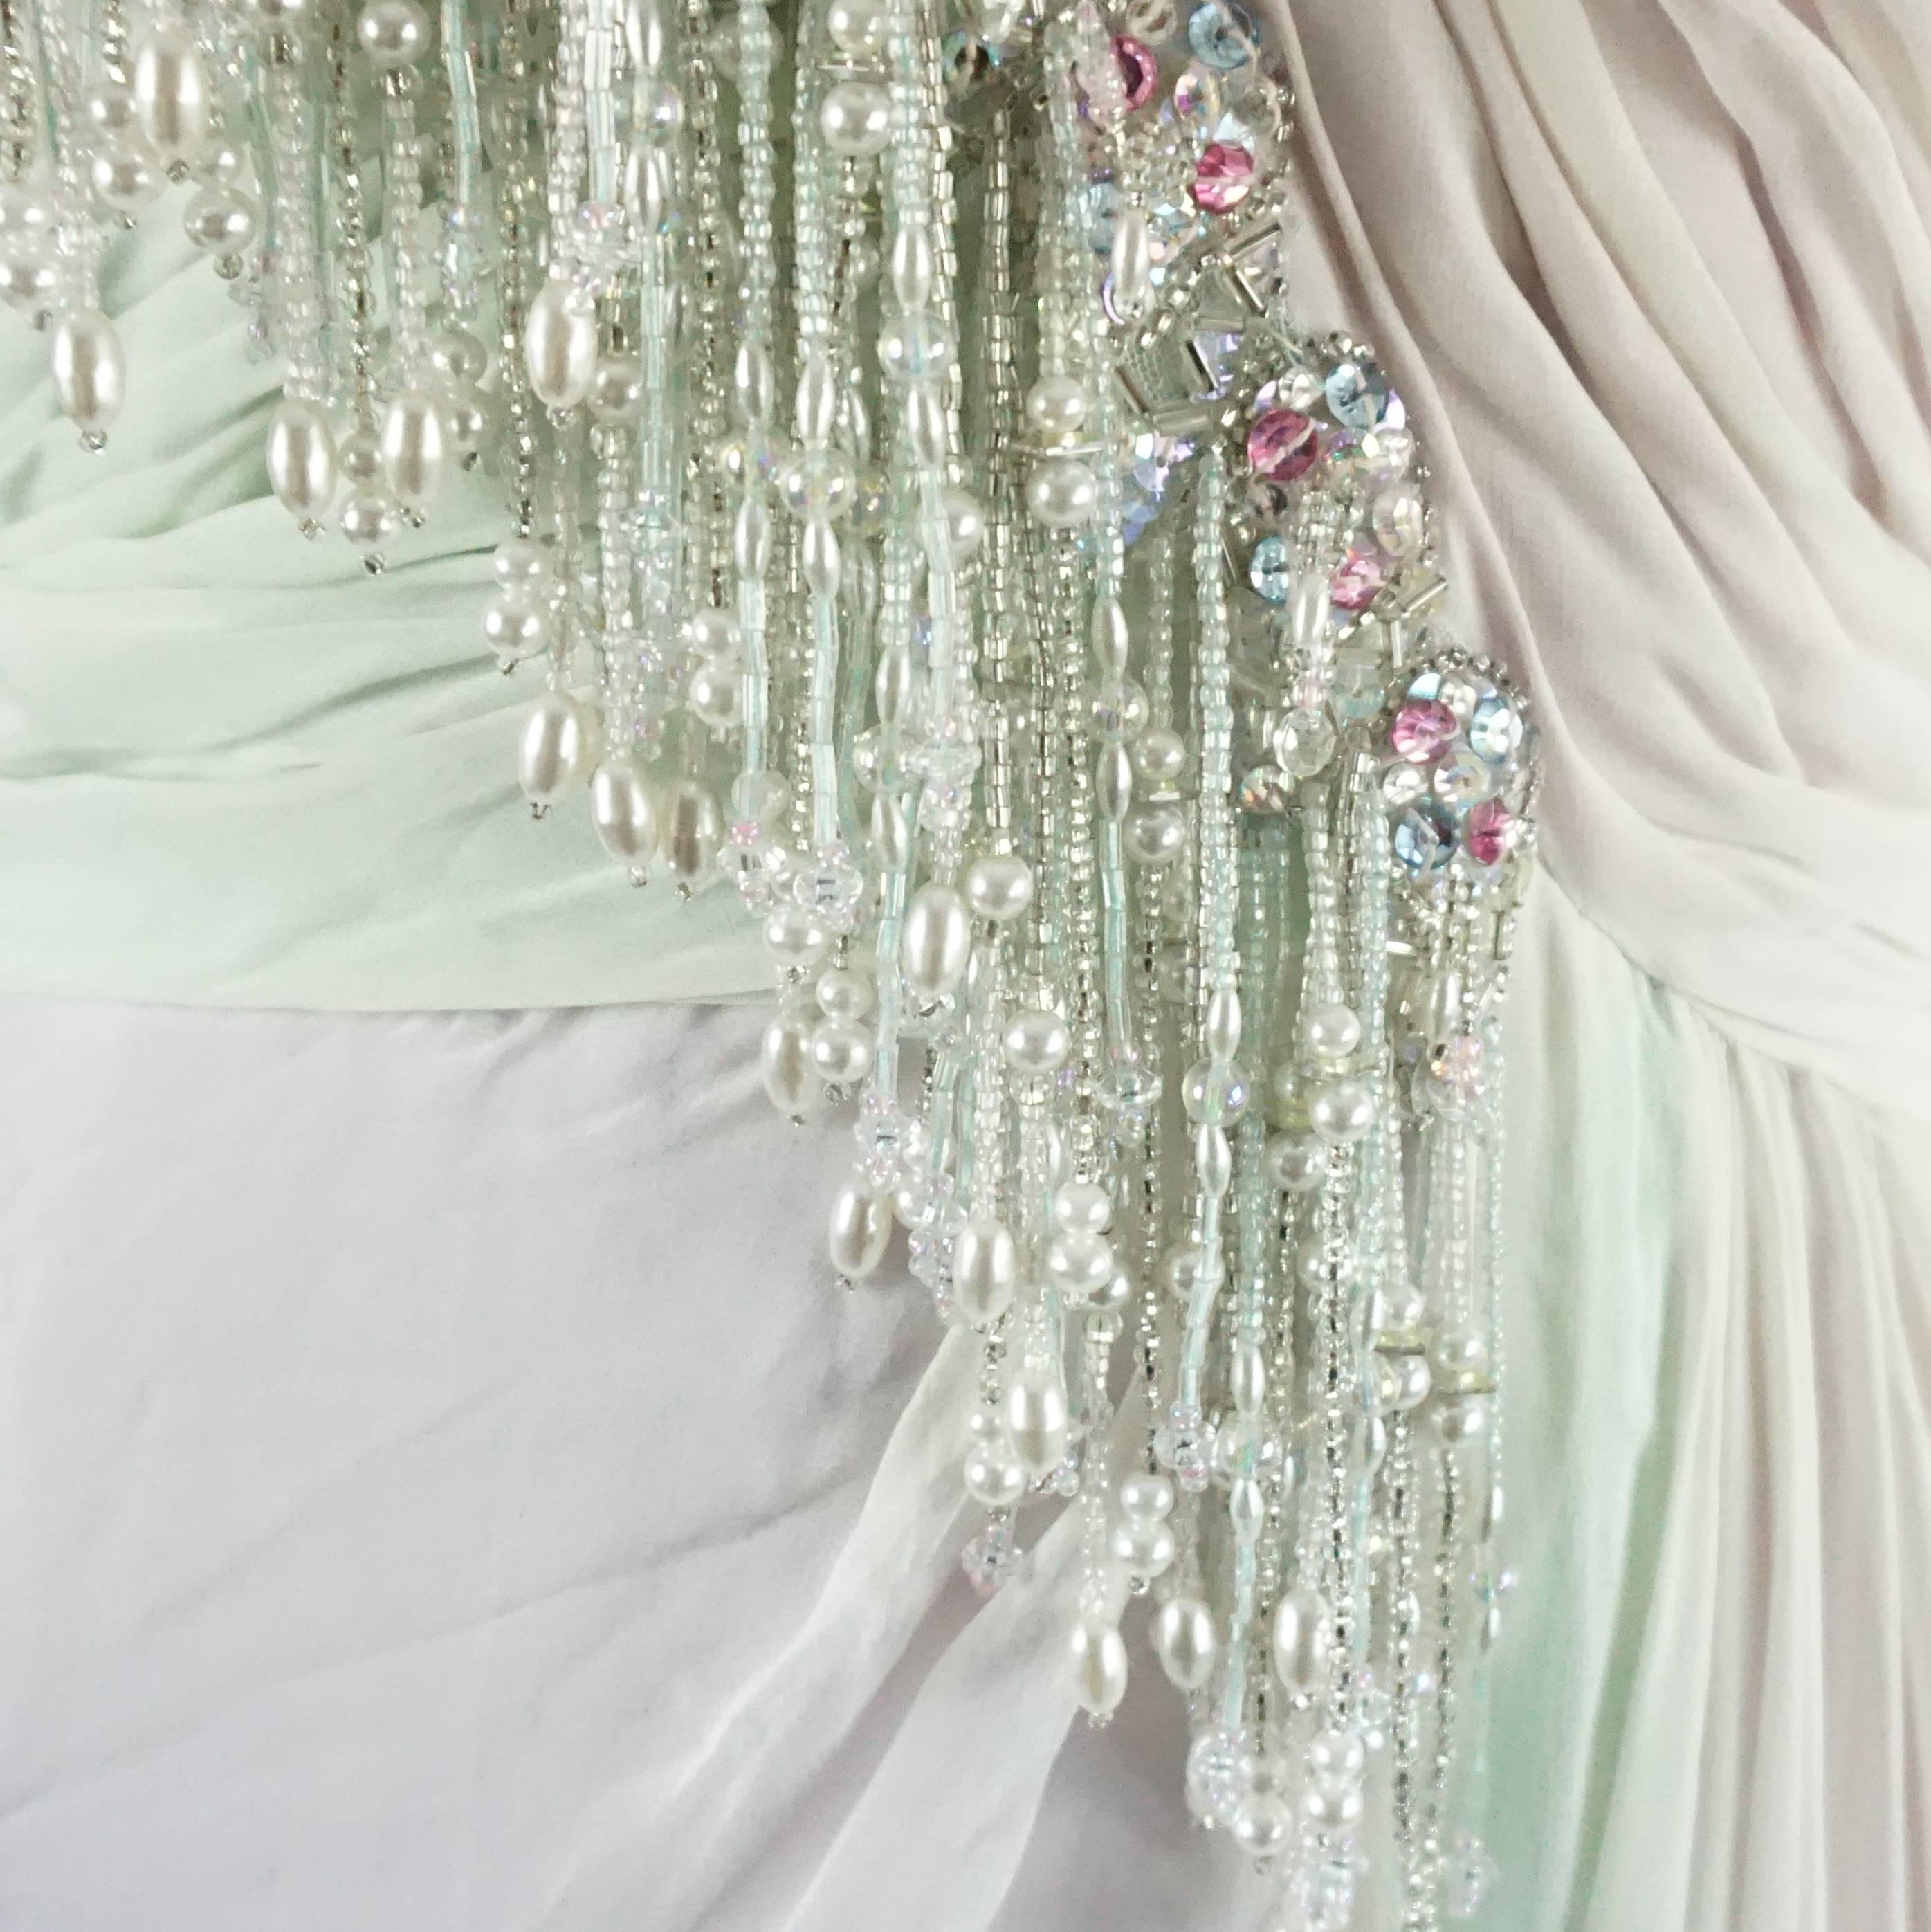 Gray Bob Mackie Pastels Silk Chiffon Gown with Hanging Beads - 6 - circa 1980's